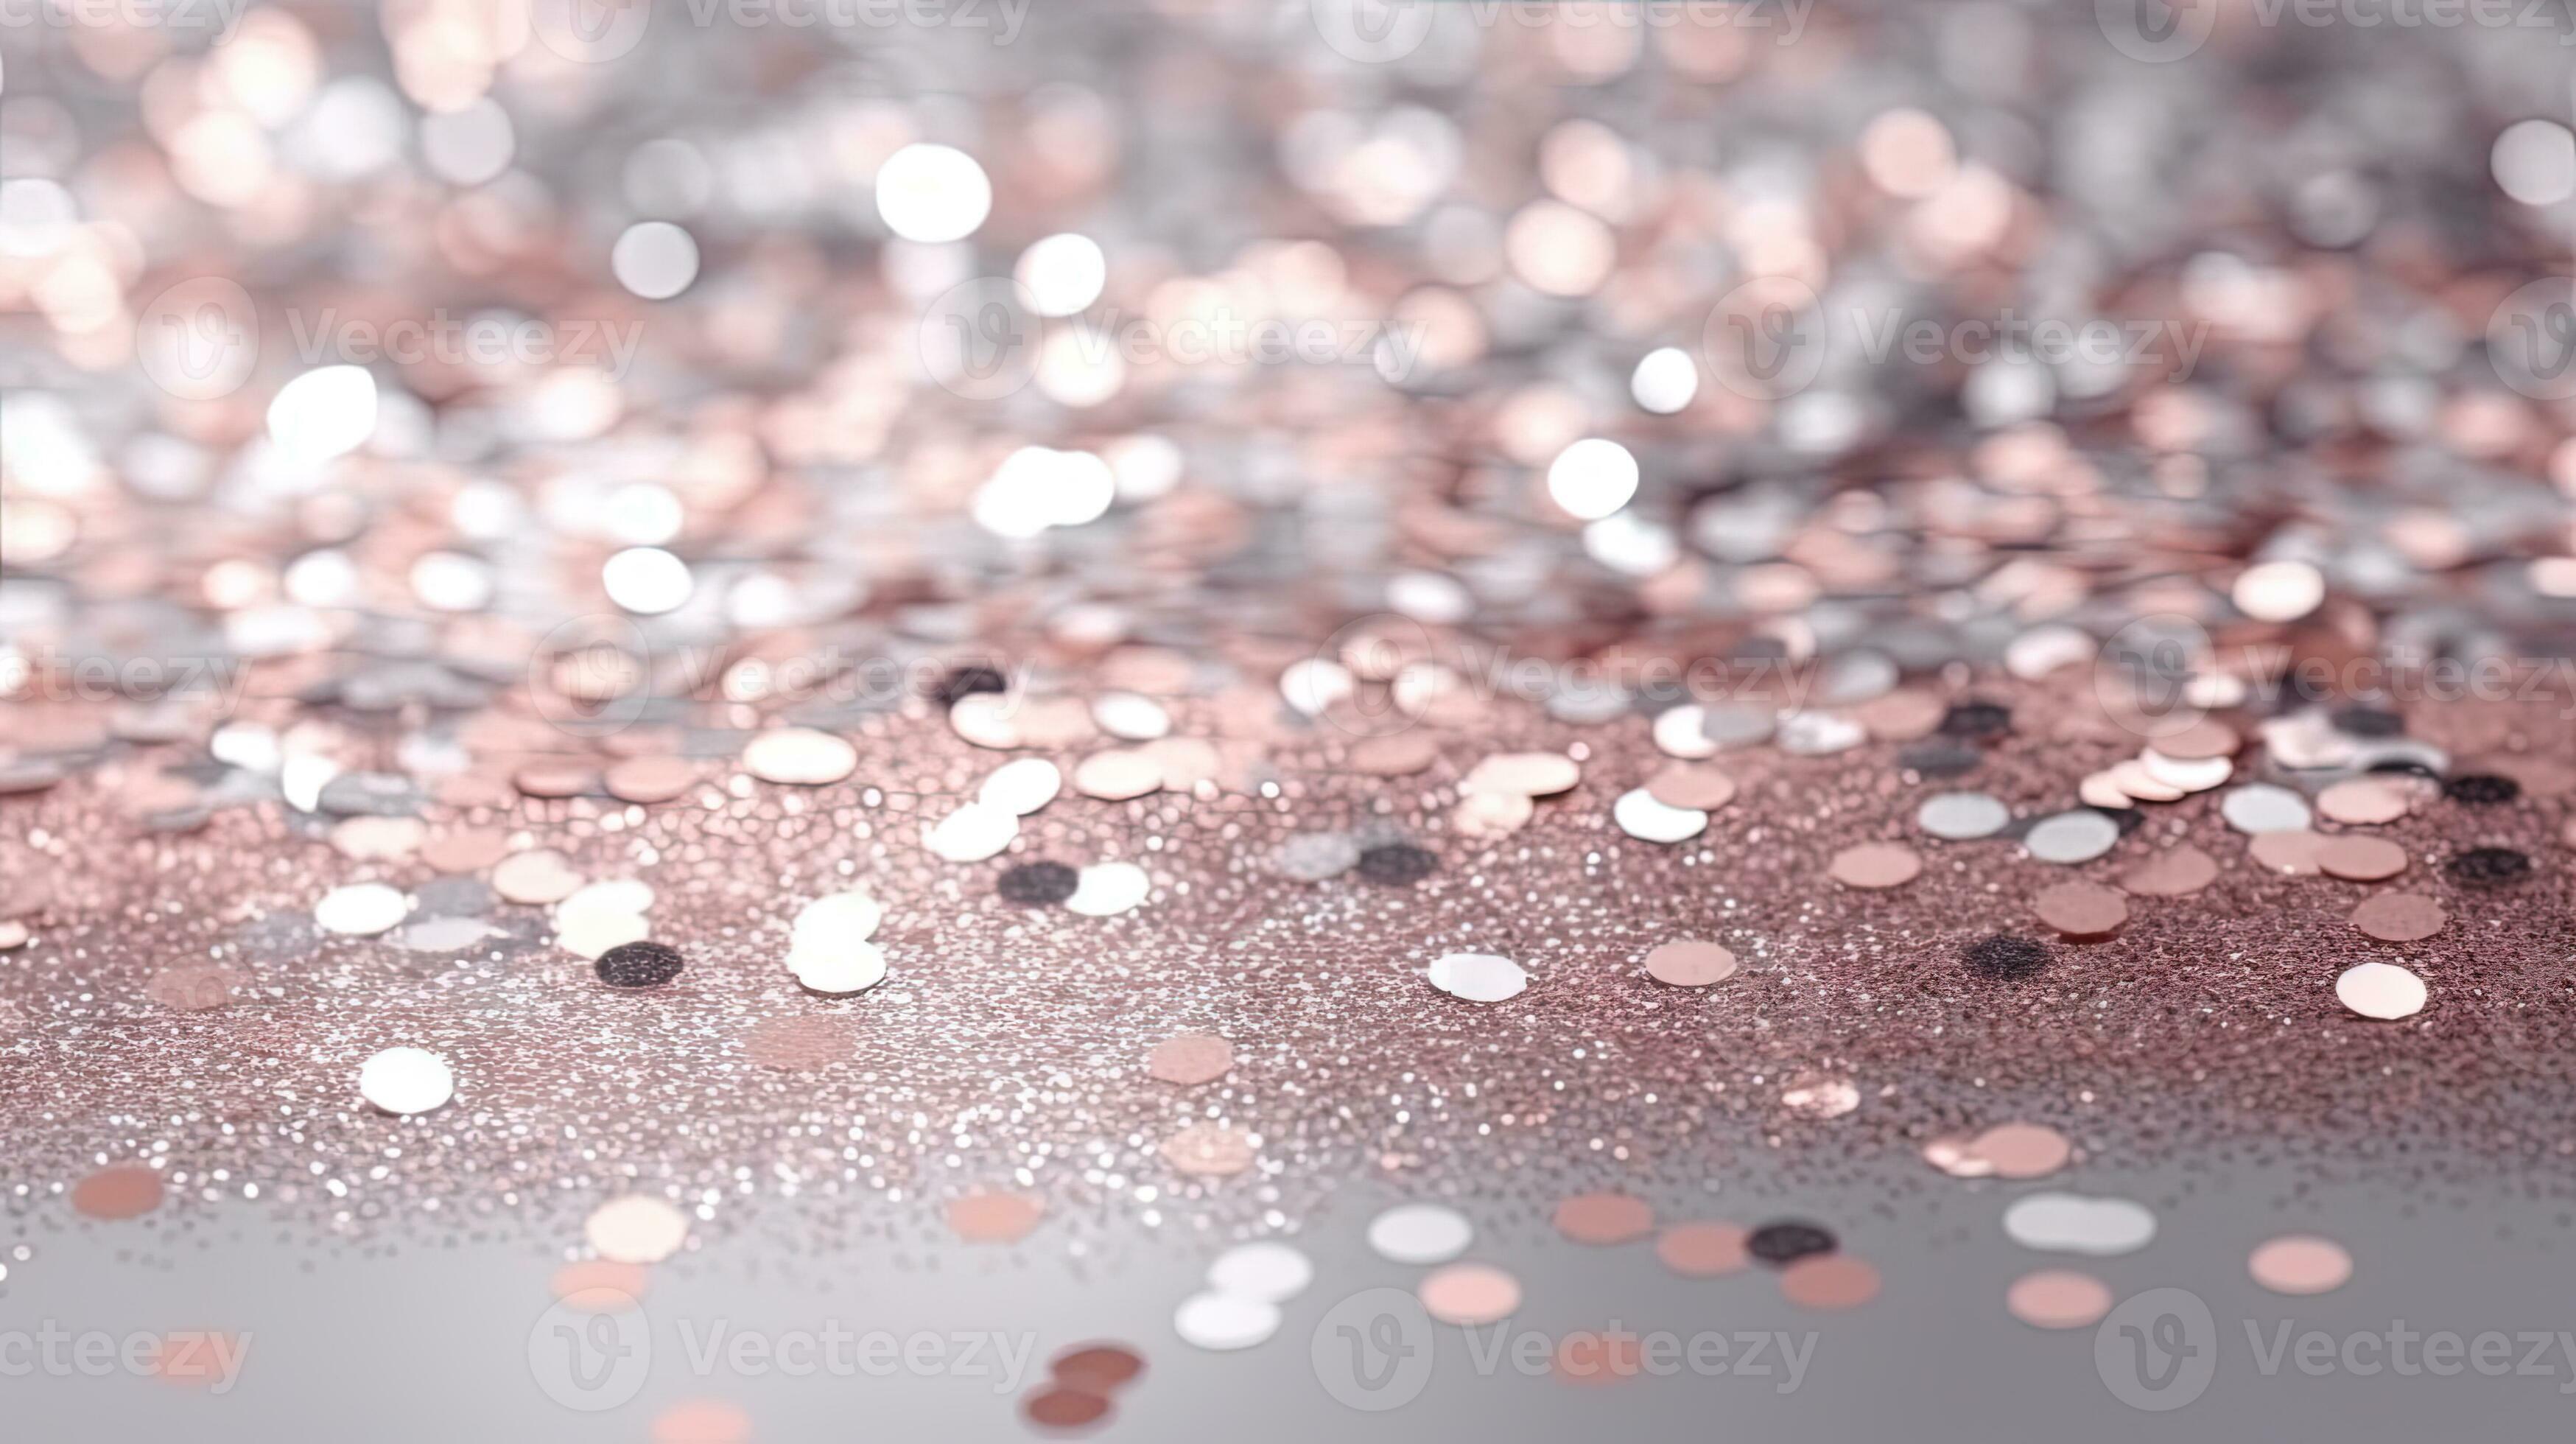 Pink Glitter Texture Sparkle Vector Background Rose Confetti